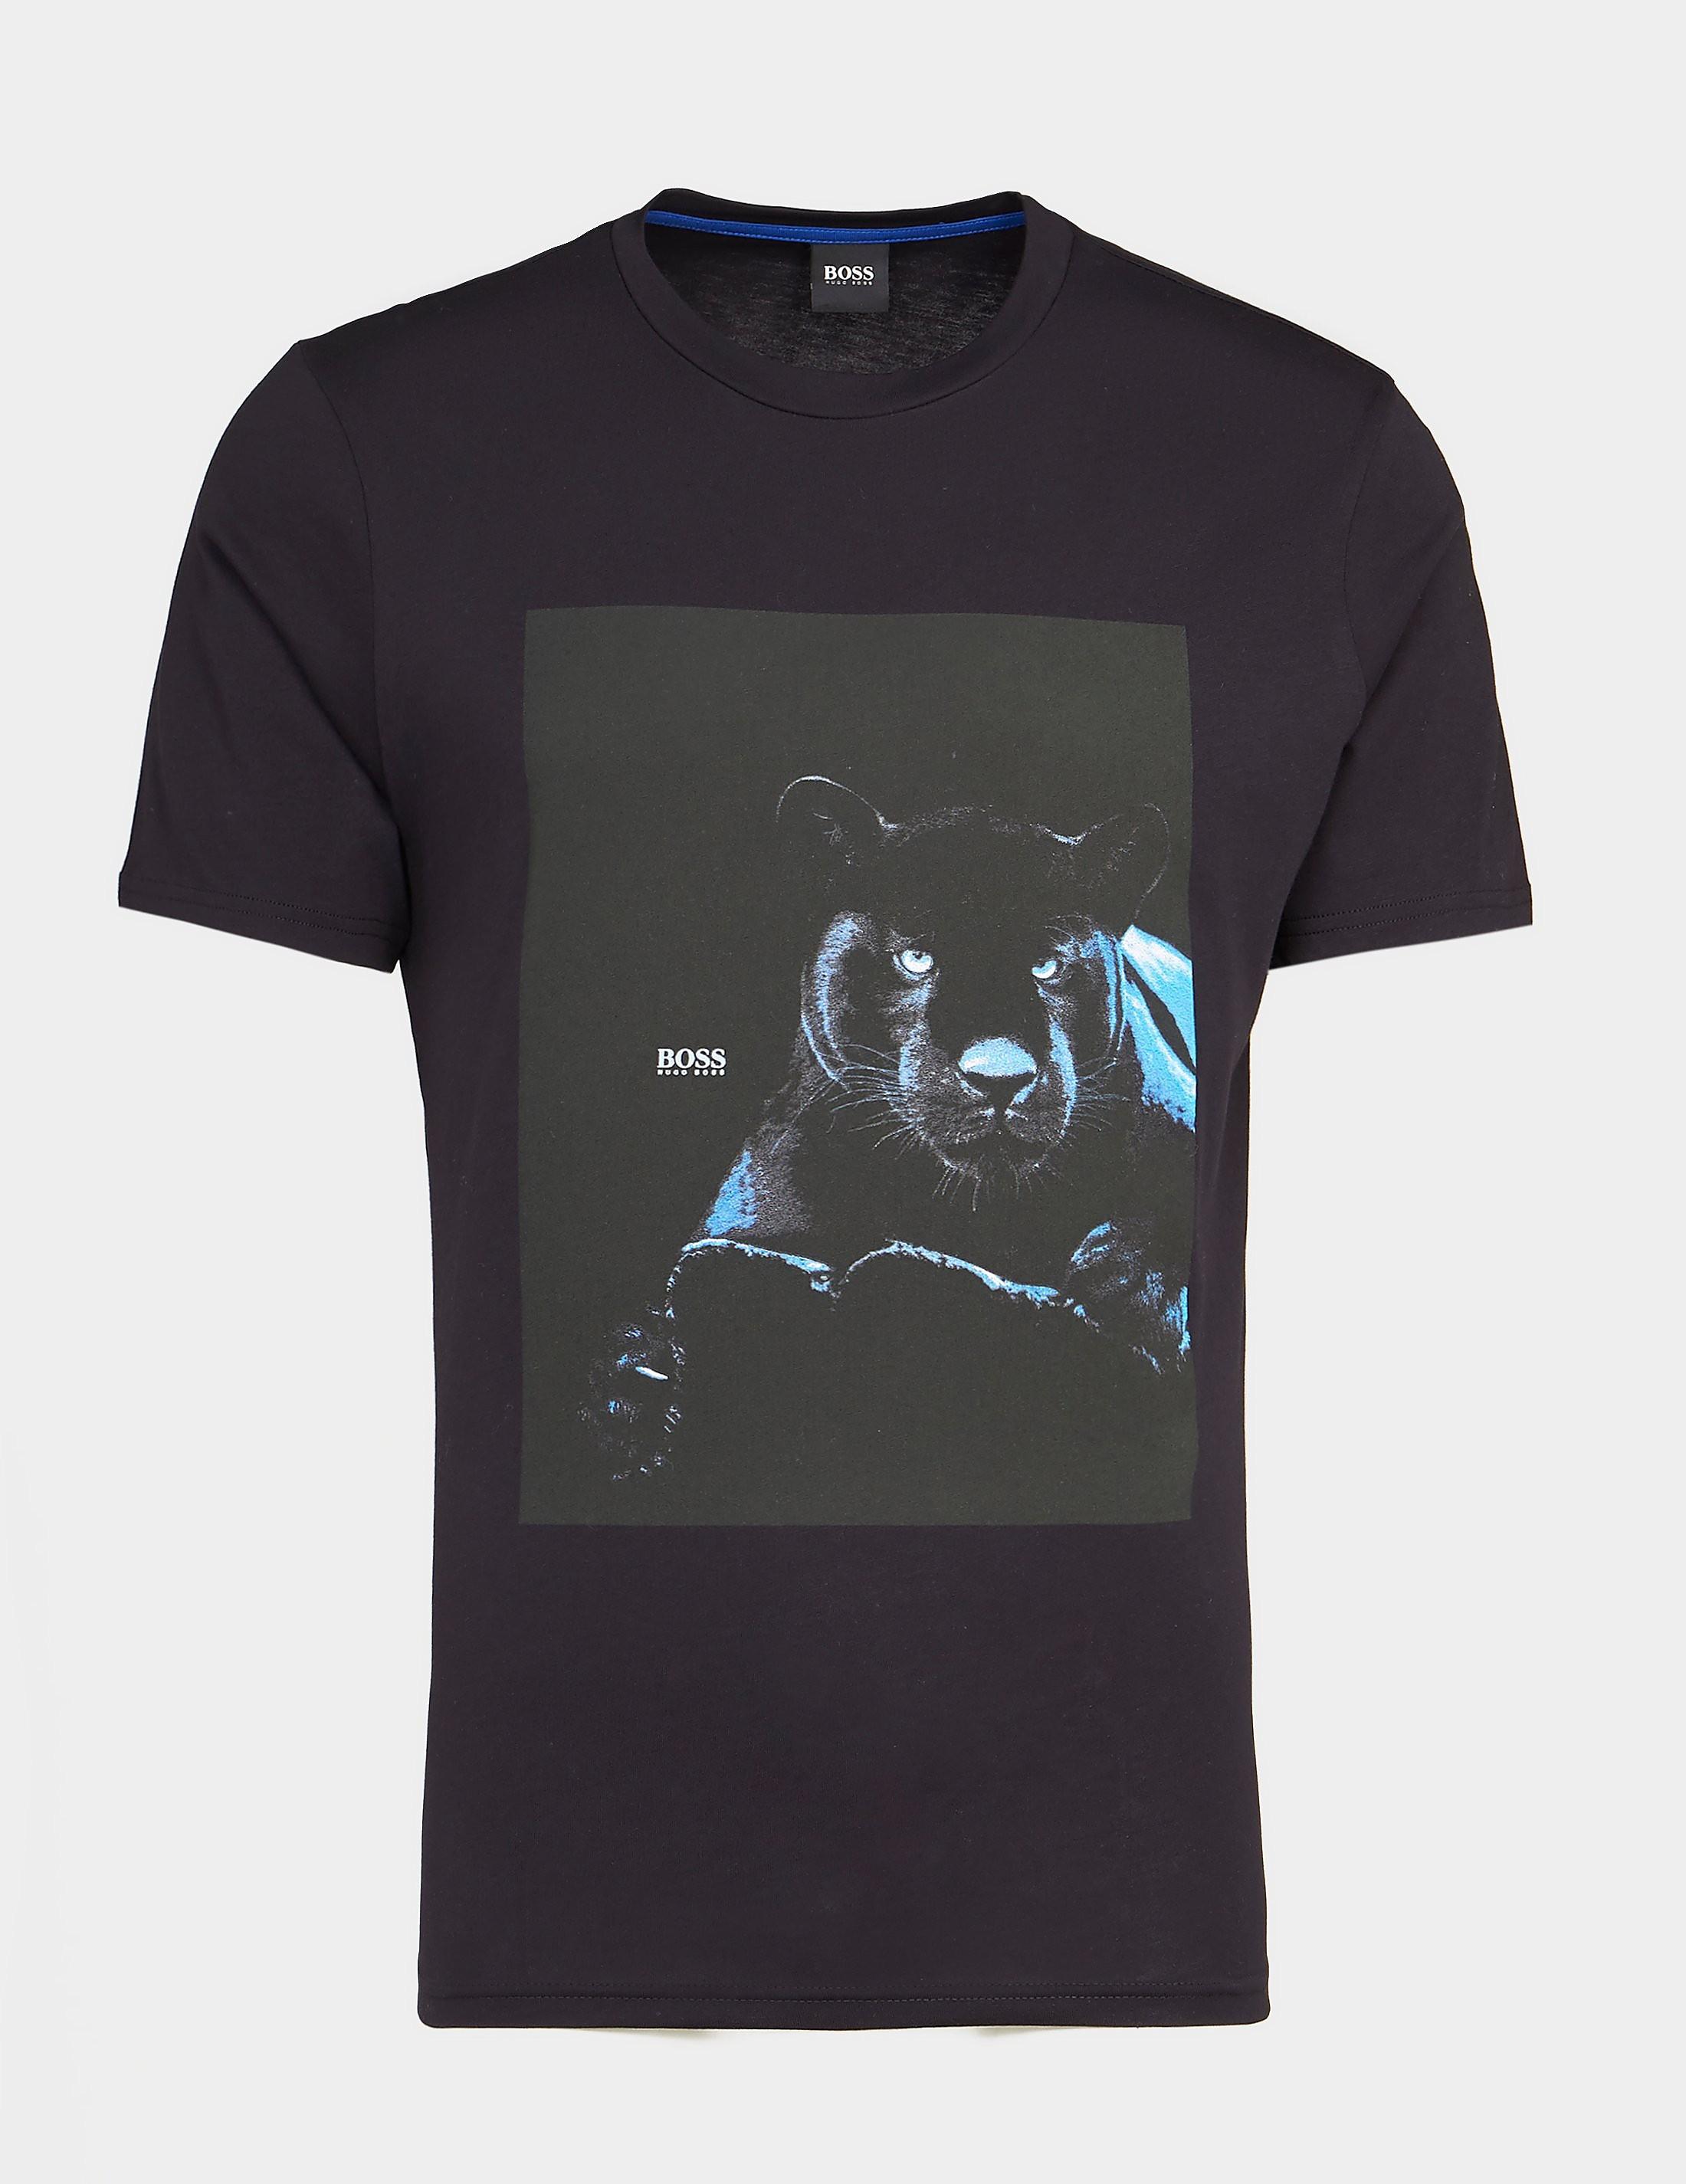 BOSS by HUGO BOSS Terisk Panther T-shirt in Black for Men - Lyst